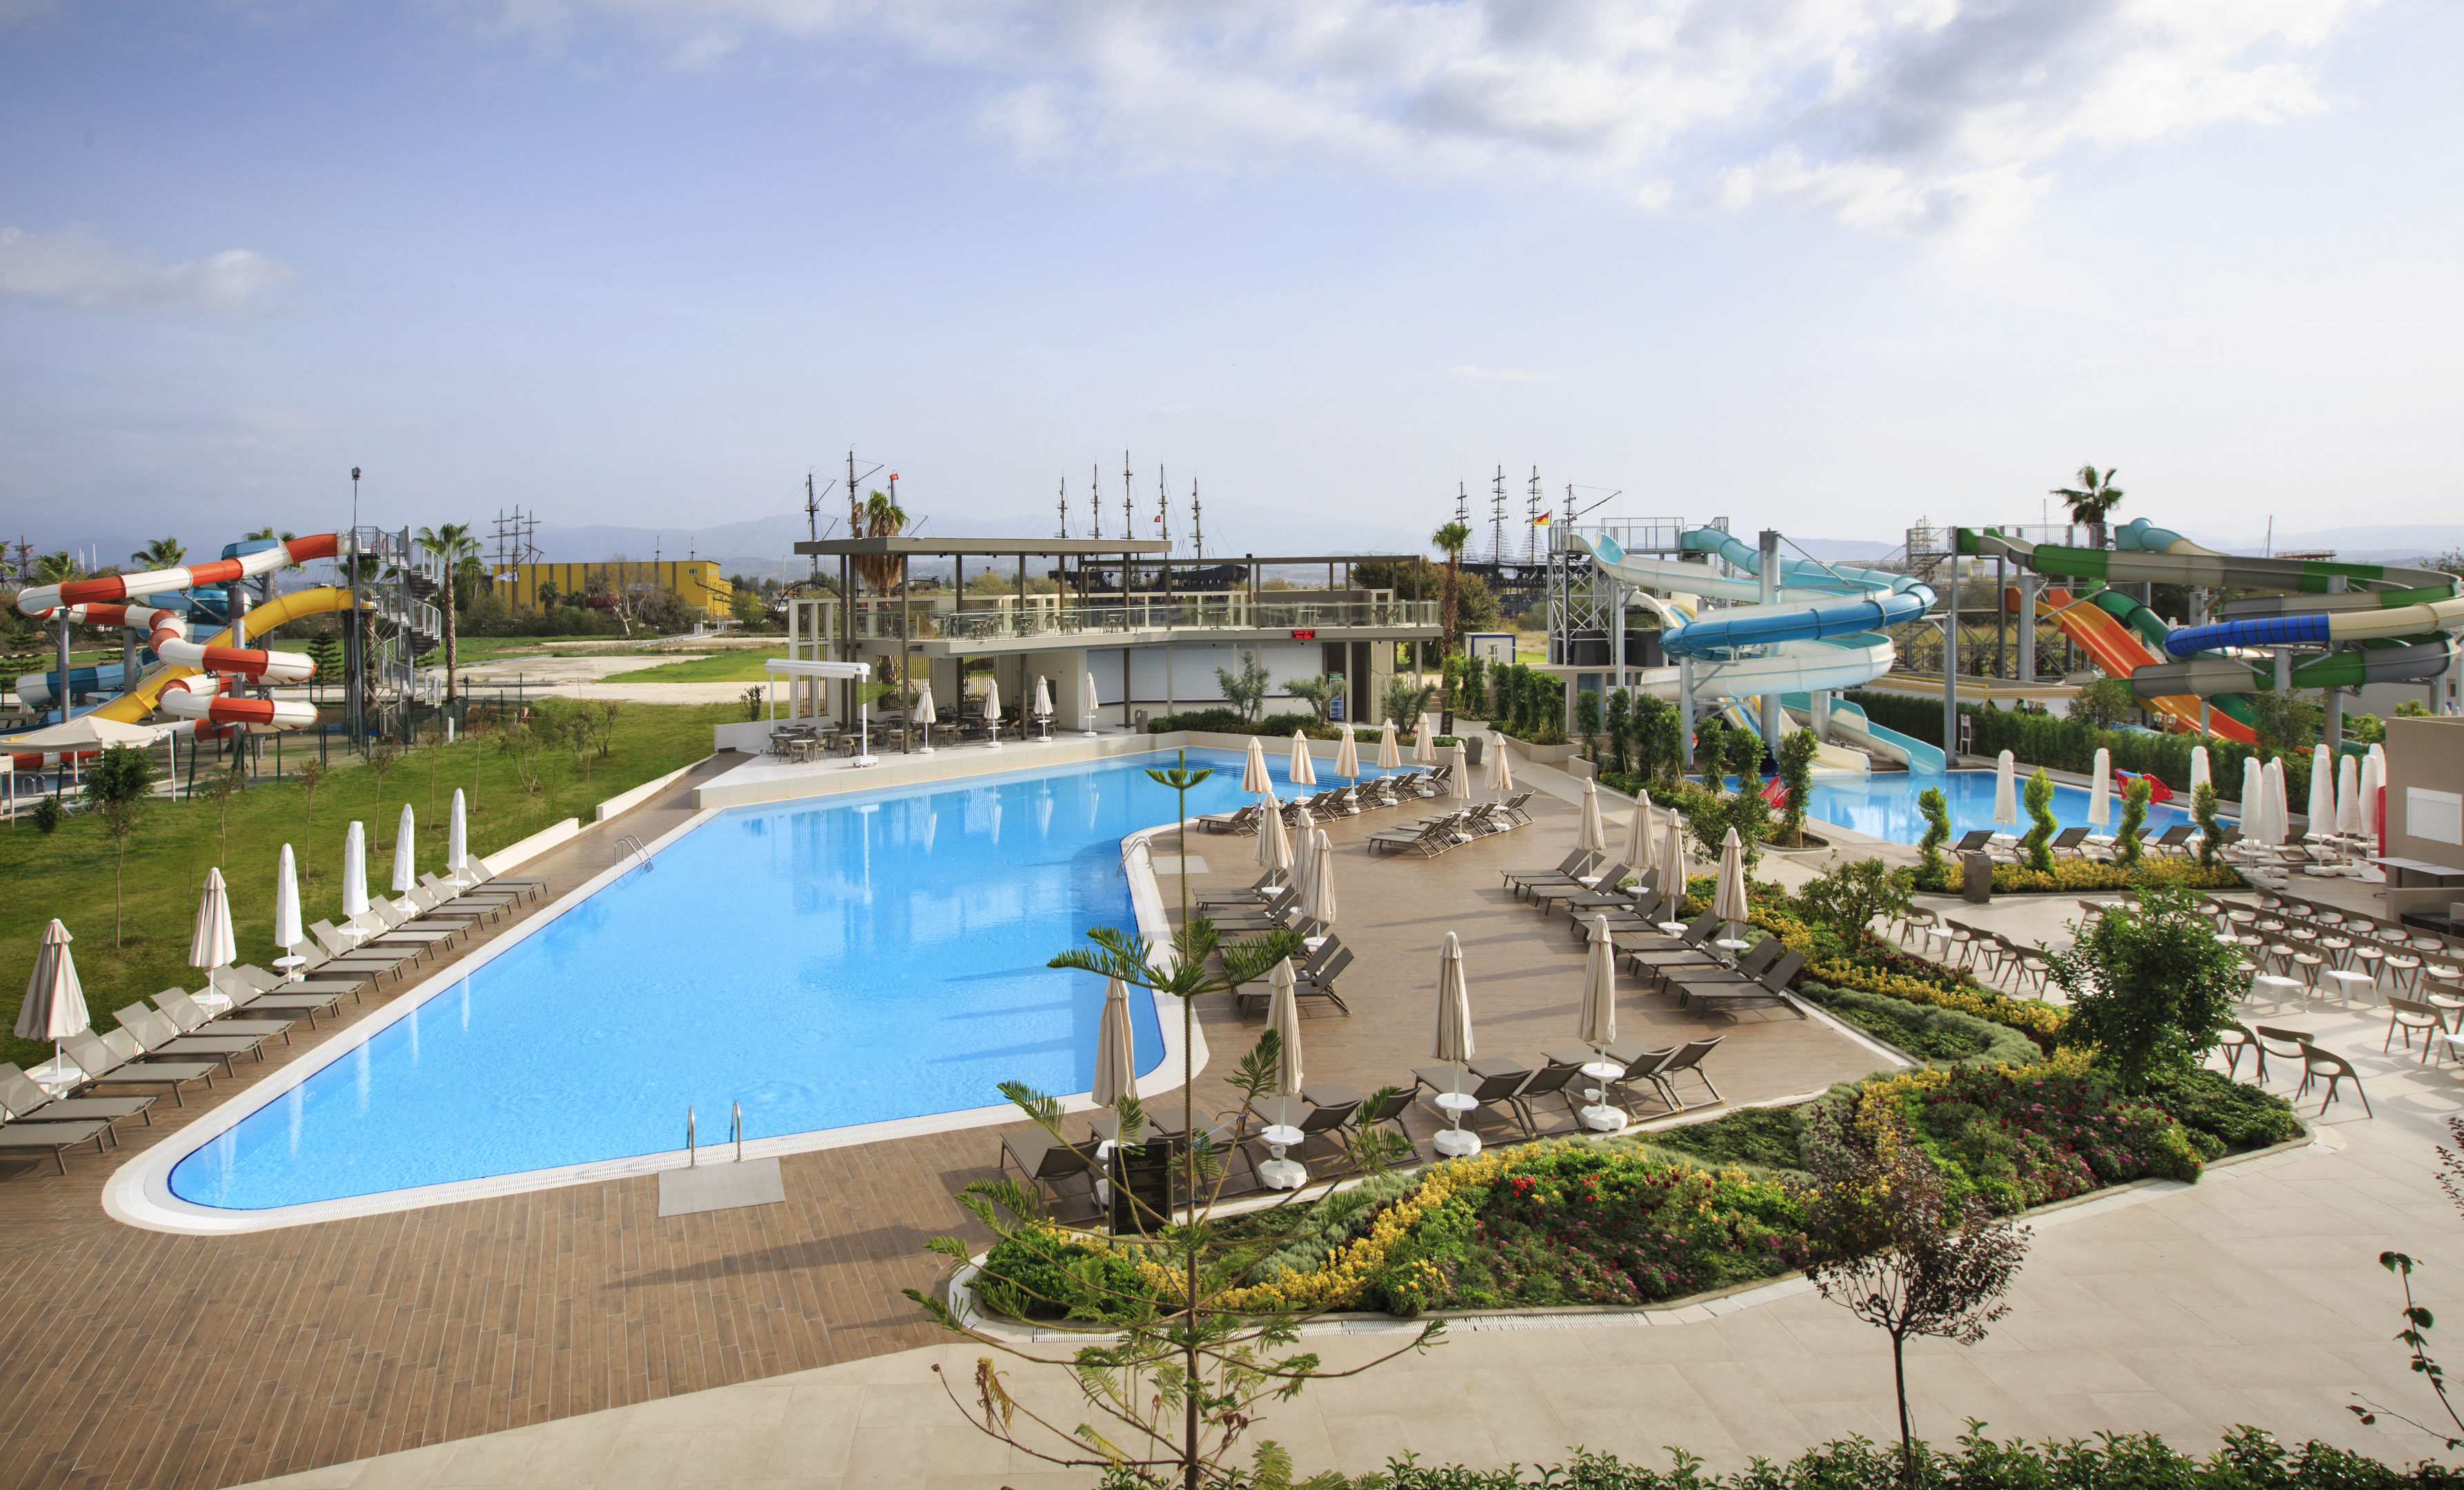 RIOLAVITAS Spa & Resort